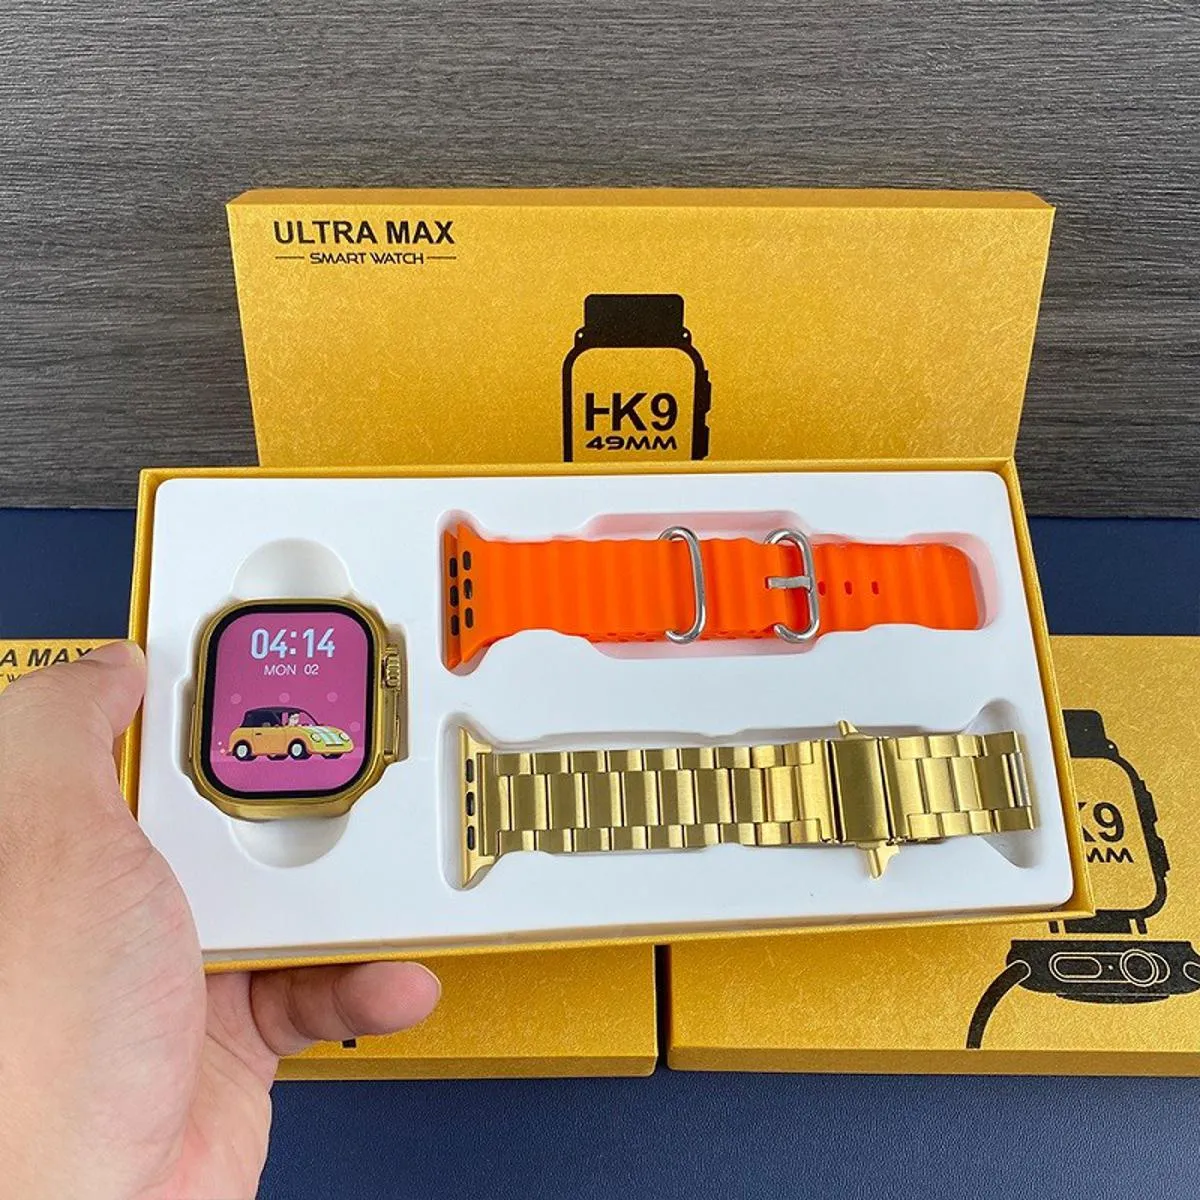 HK9 Ultra Max Smart Watch Price in Pakistan